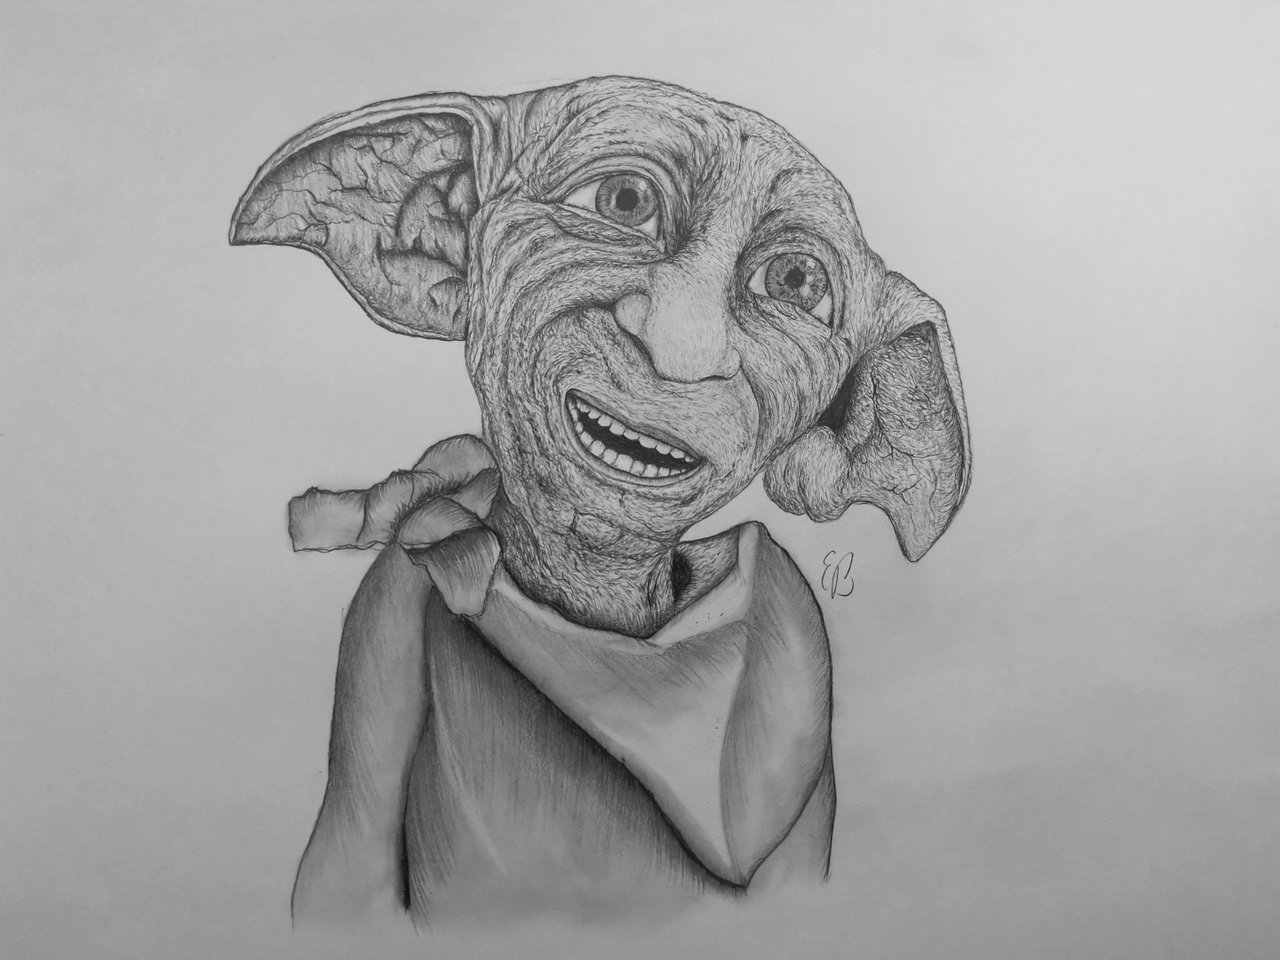 Dobby the freeelf Sketch27  A HEAD FULL OF DREAMS